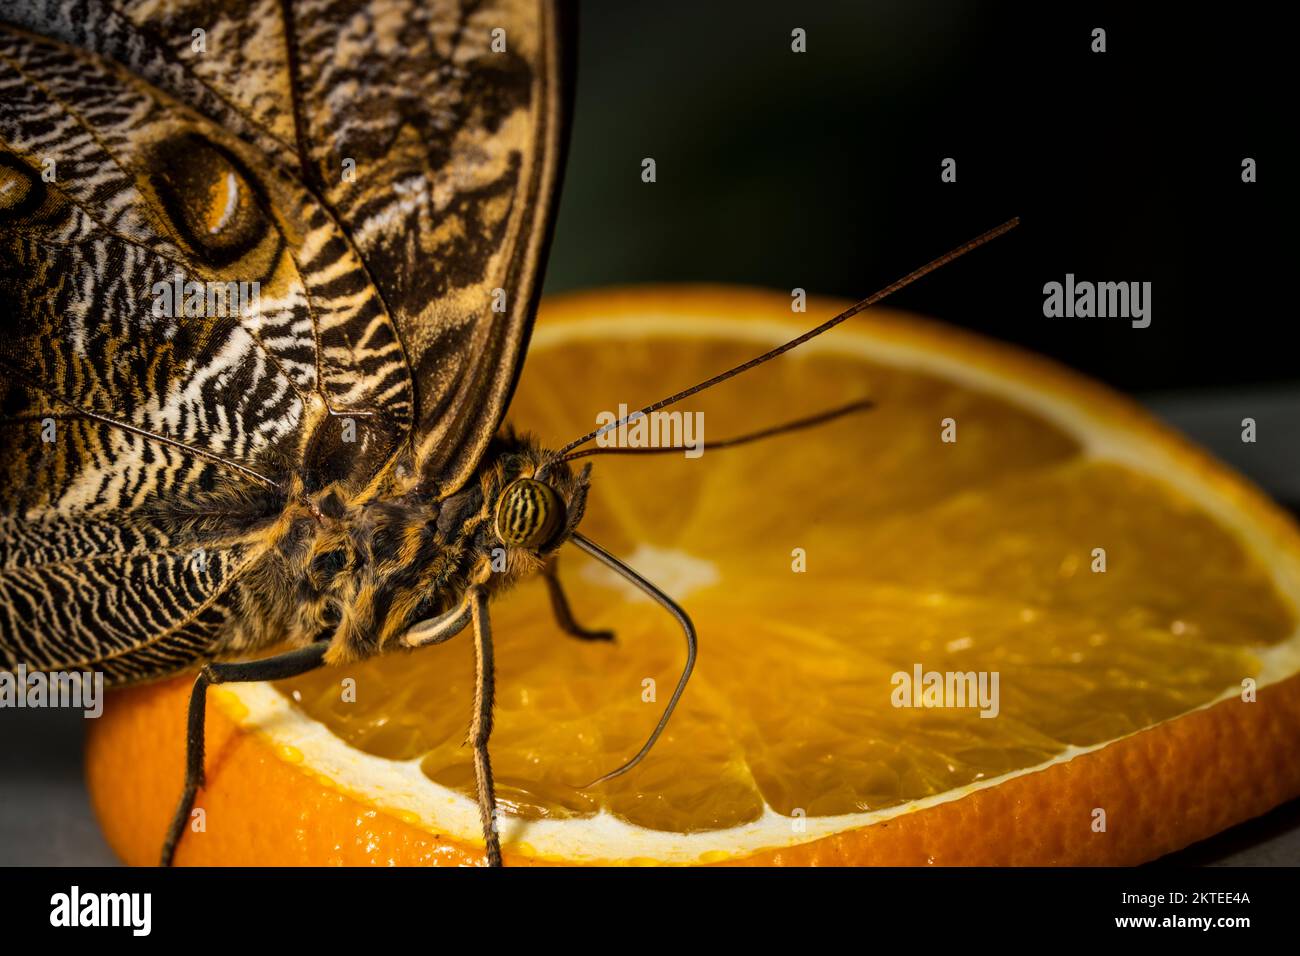 Brazilian owl butterfly feeding on an orange fruit in a vivarium. Stock Photo